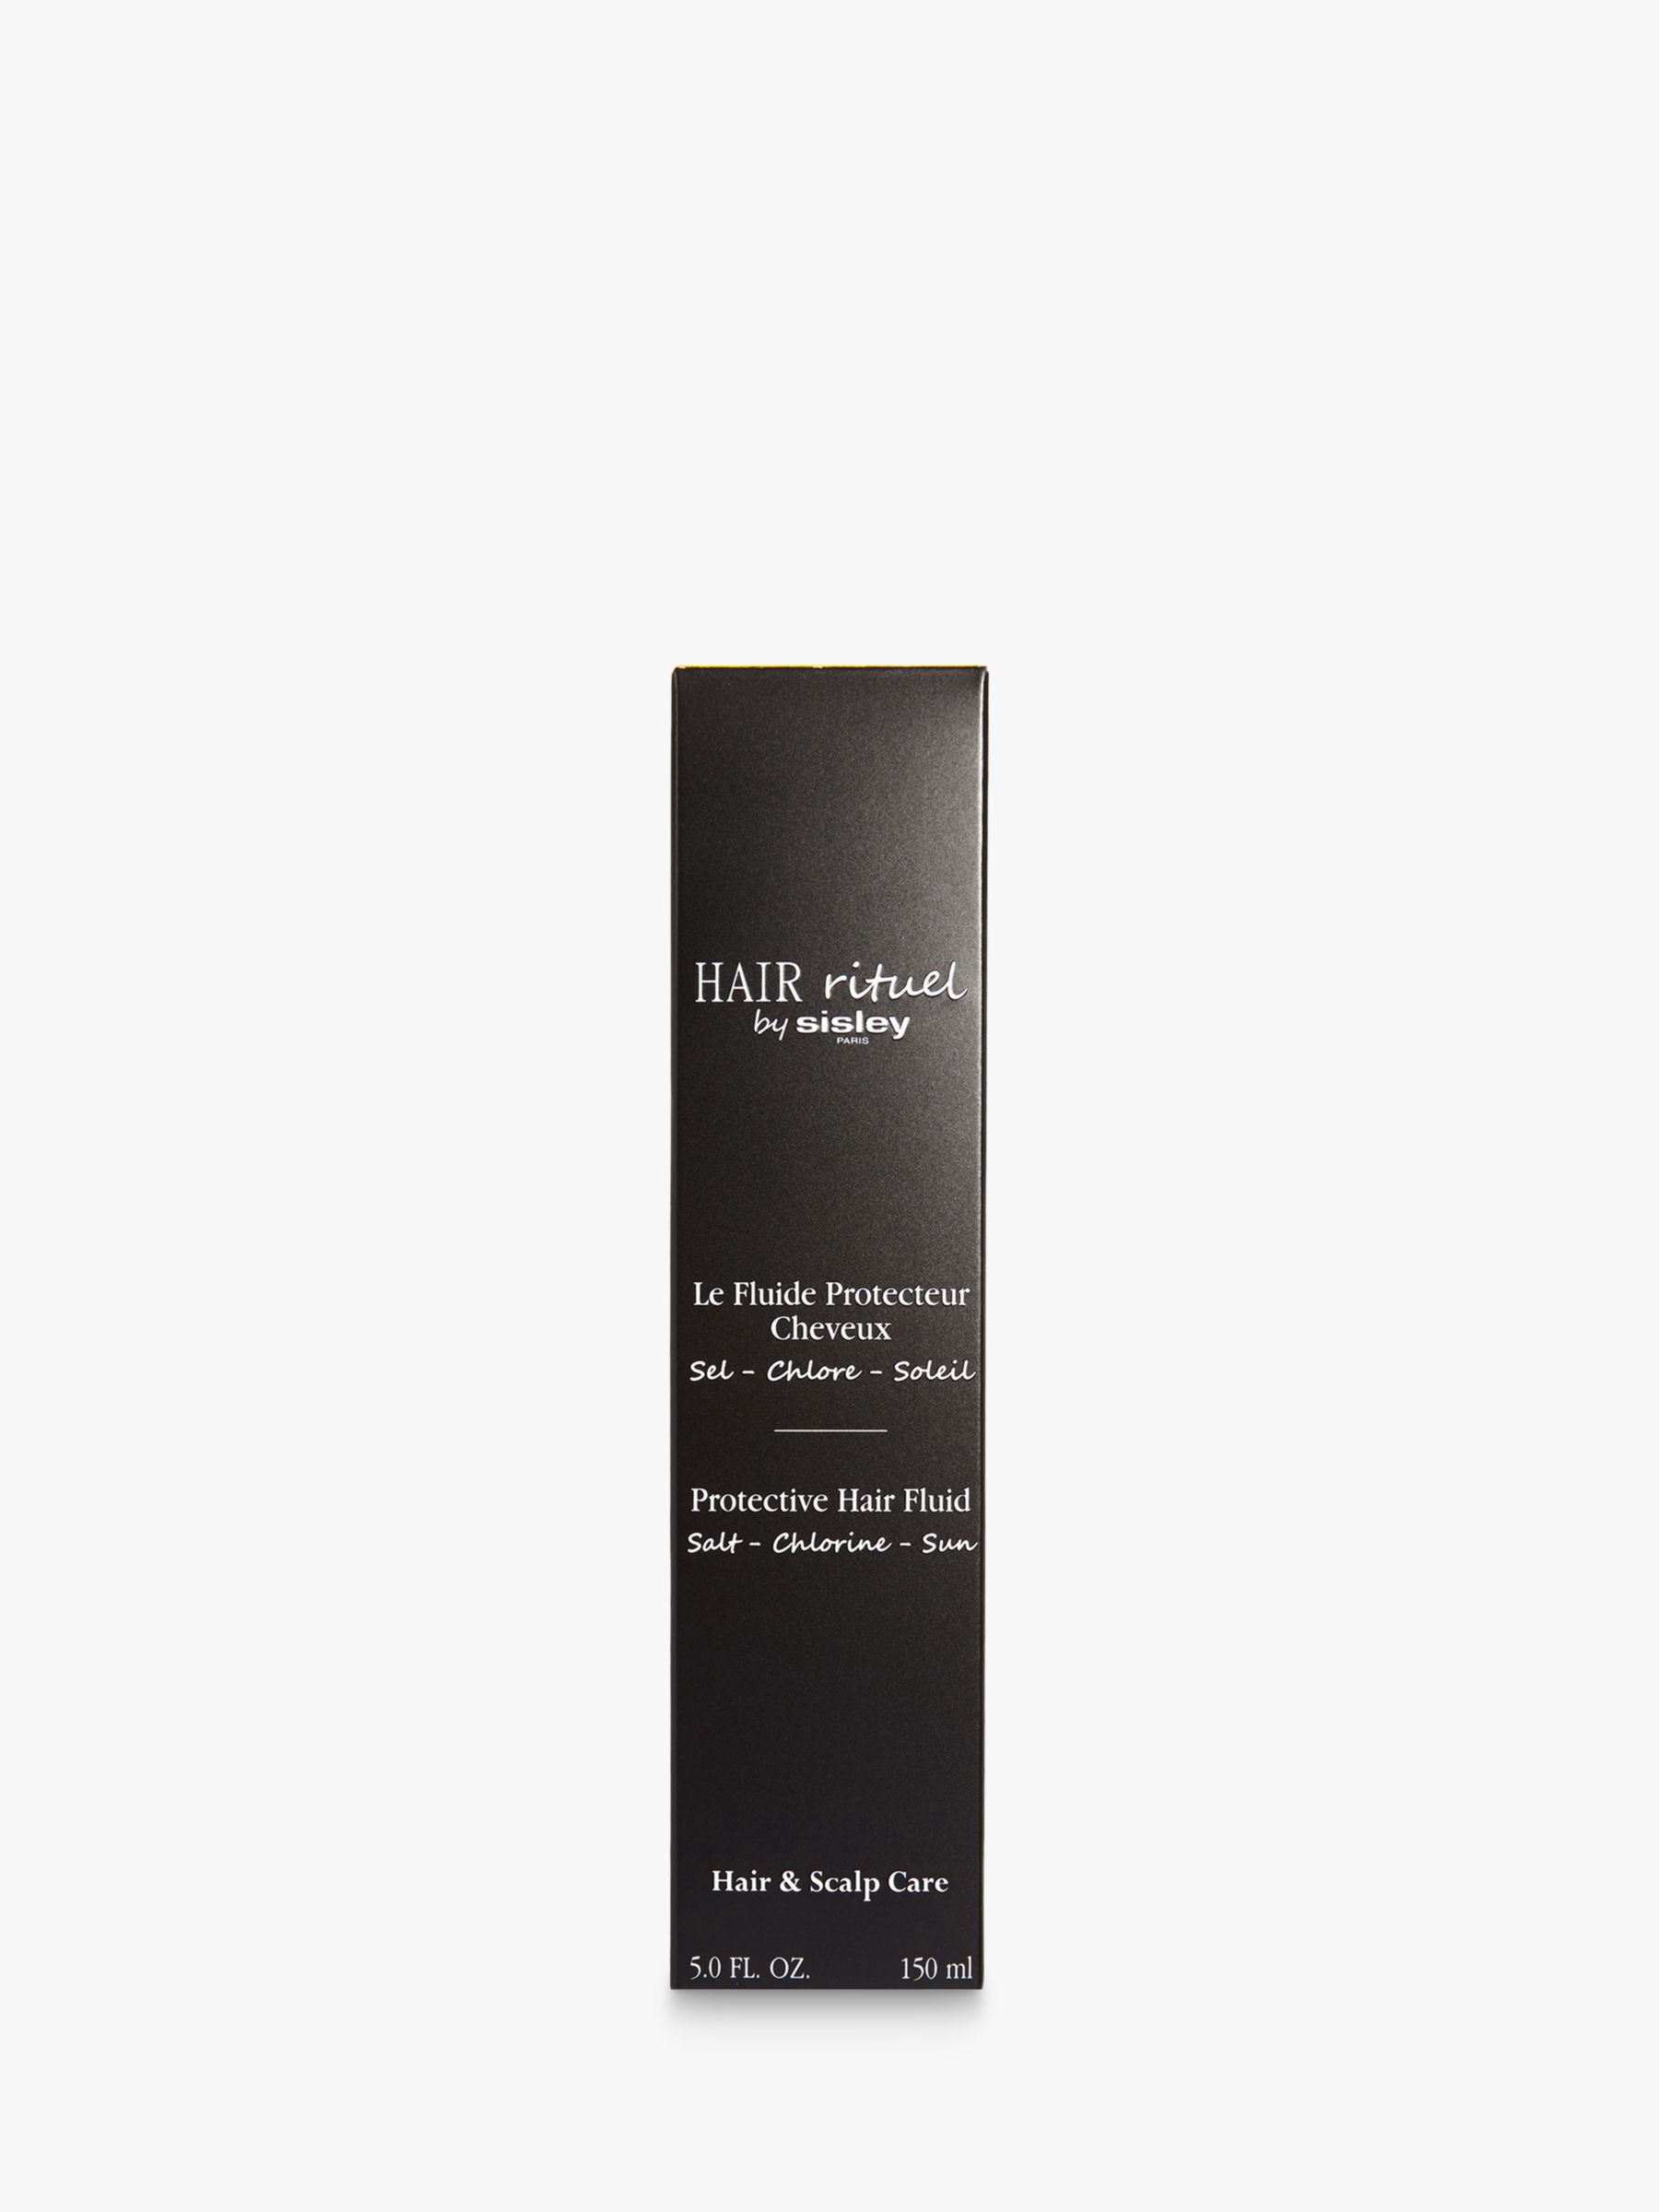 Sisley-Paris Hair Rituel Hair Protective Fluid, 150ml